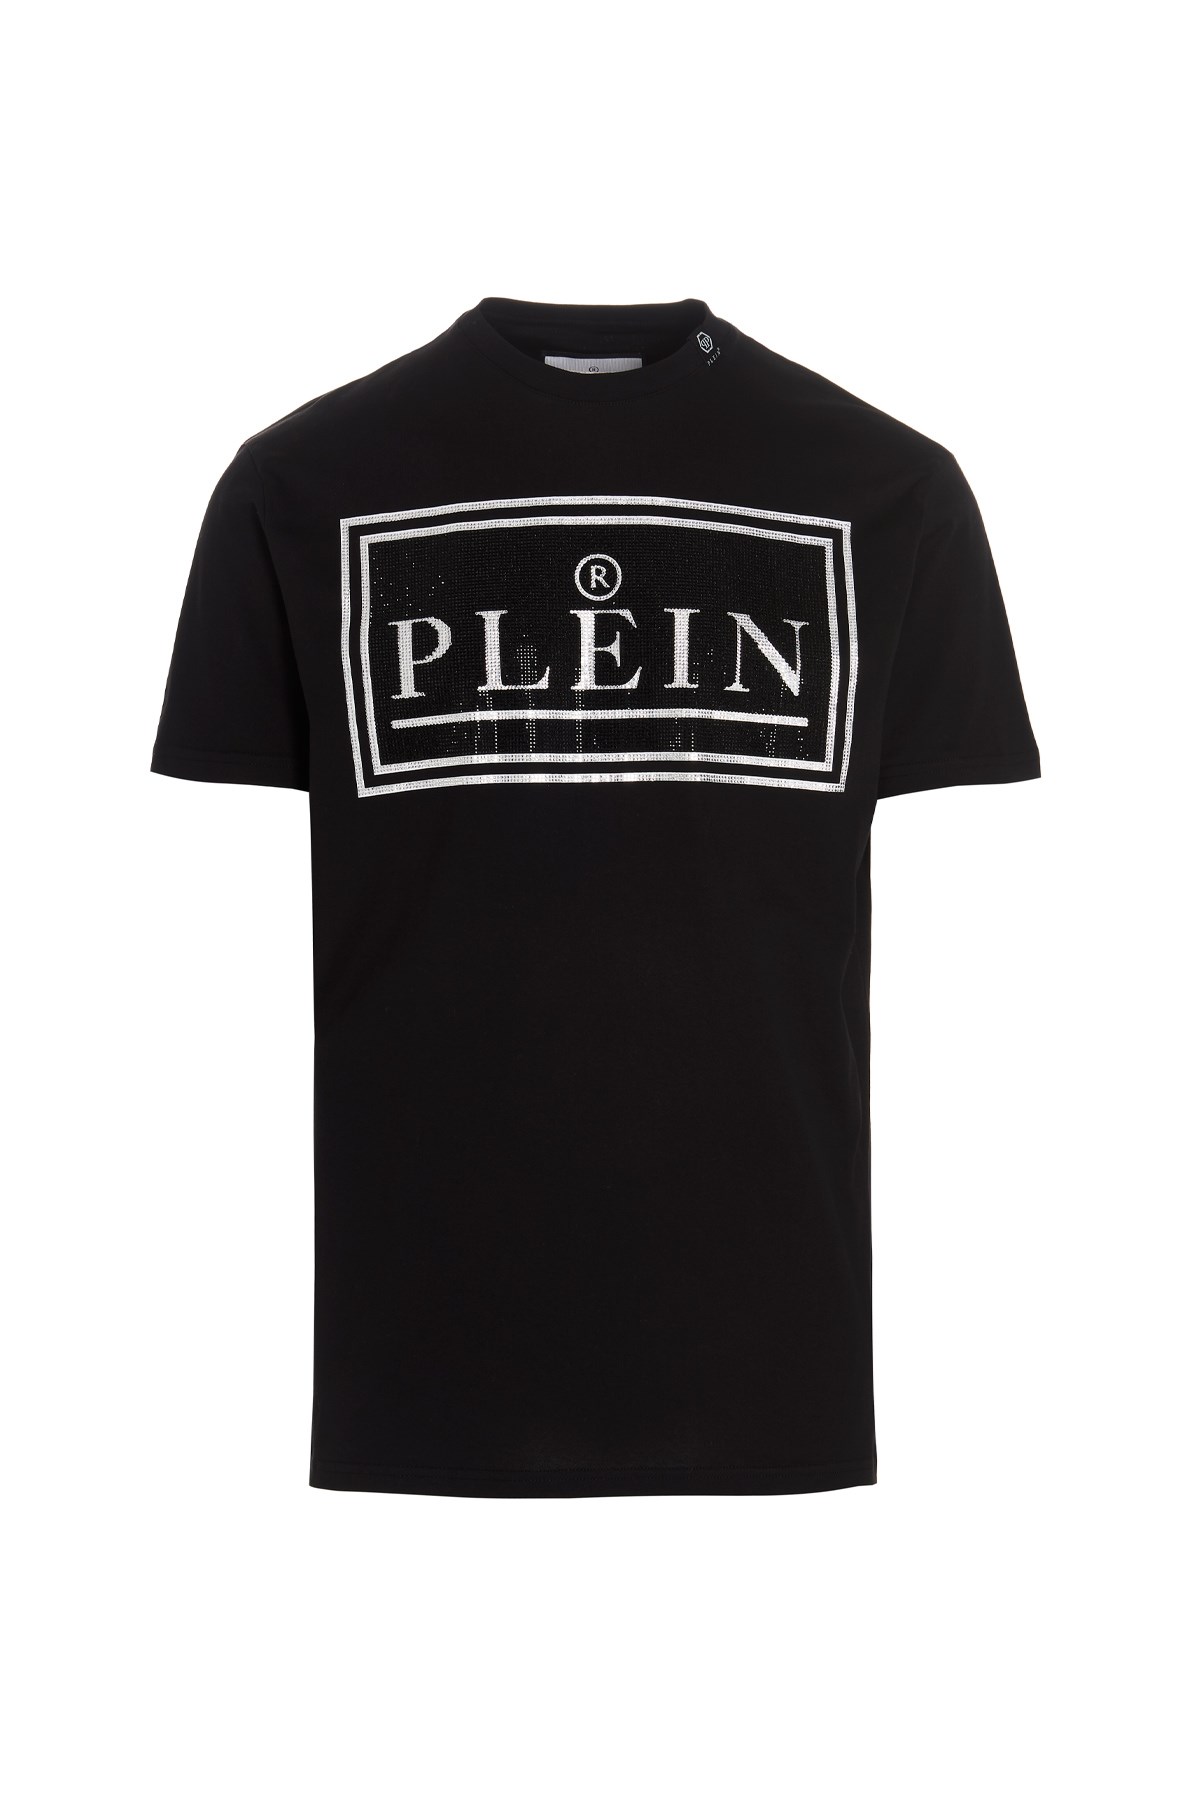 PHILIPP PLEIN Logo Sequin T-Shirt